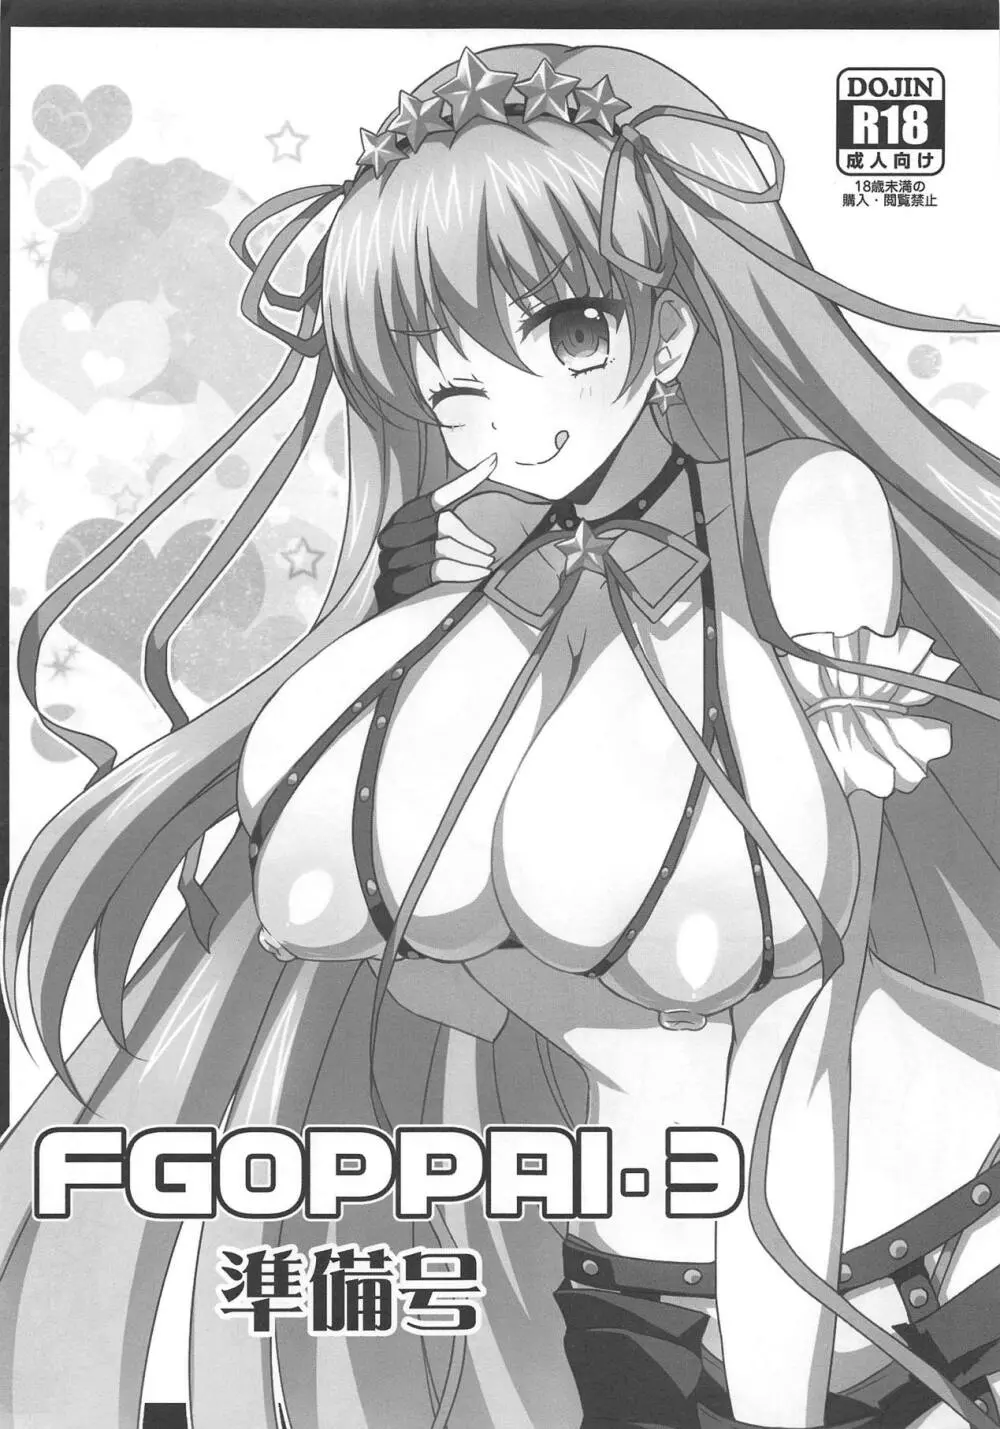 FGOPPAI3 準備号 - page1